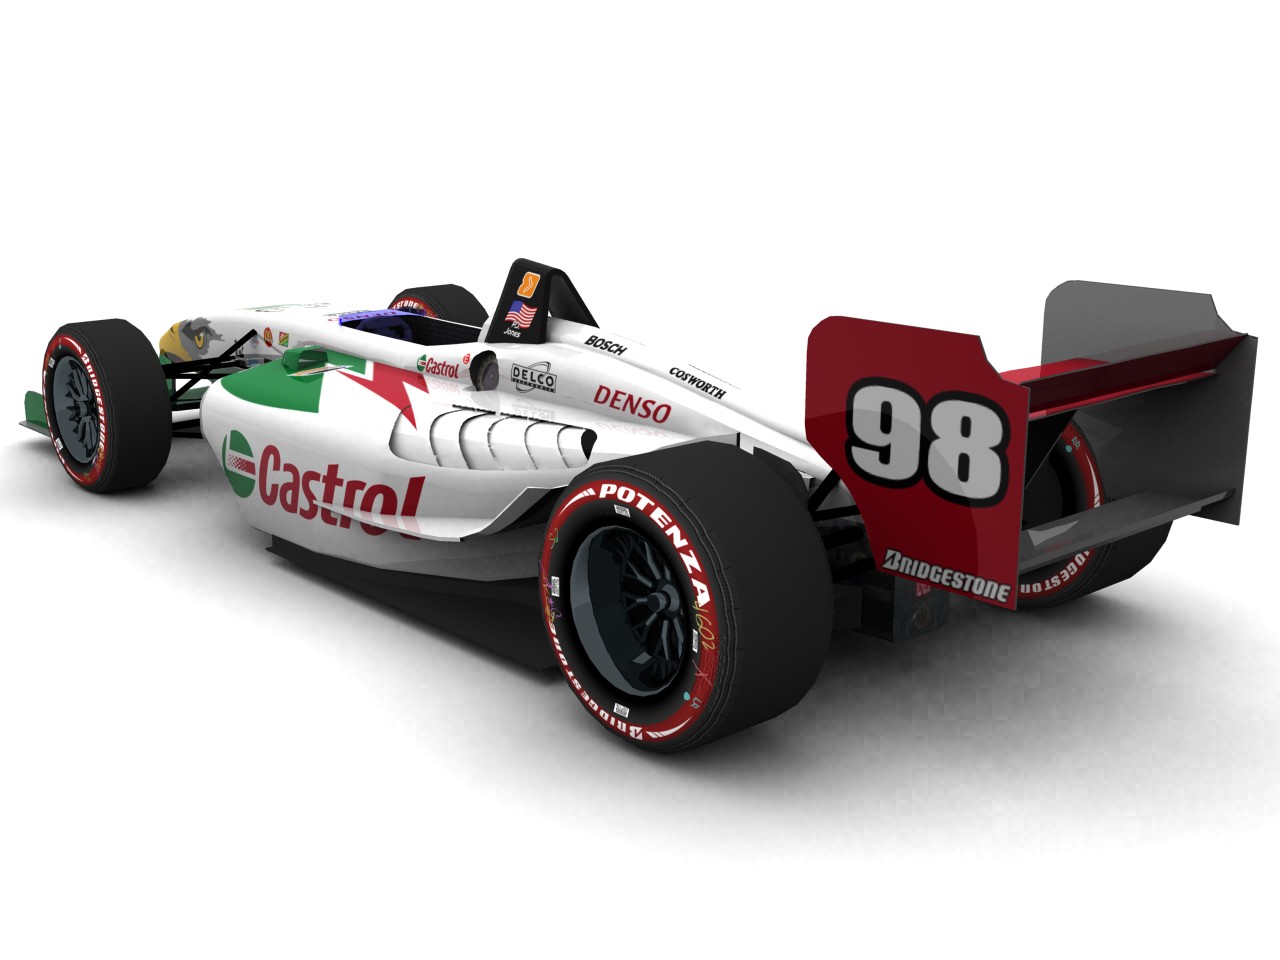 1996 – 1999 All American Racers, #98, P.J. Jones, Panoz Elan DP01, Cosworth XFE, Bridgestone Potenza, Castrol (Grün/rotes Livery) (Blick von hinten, links)